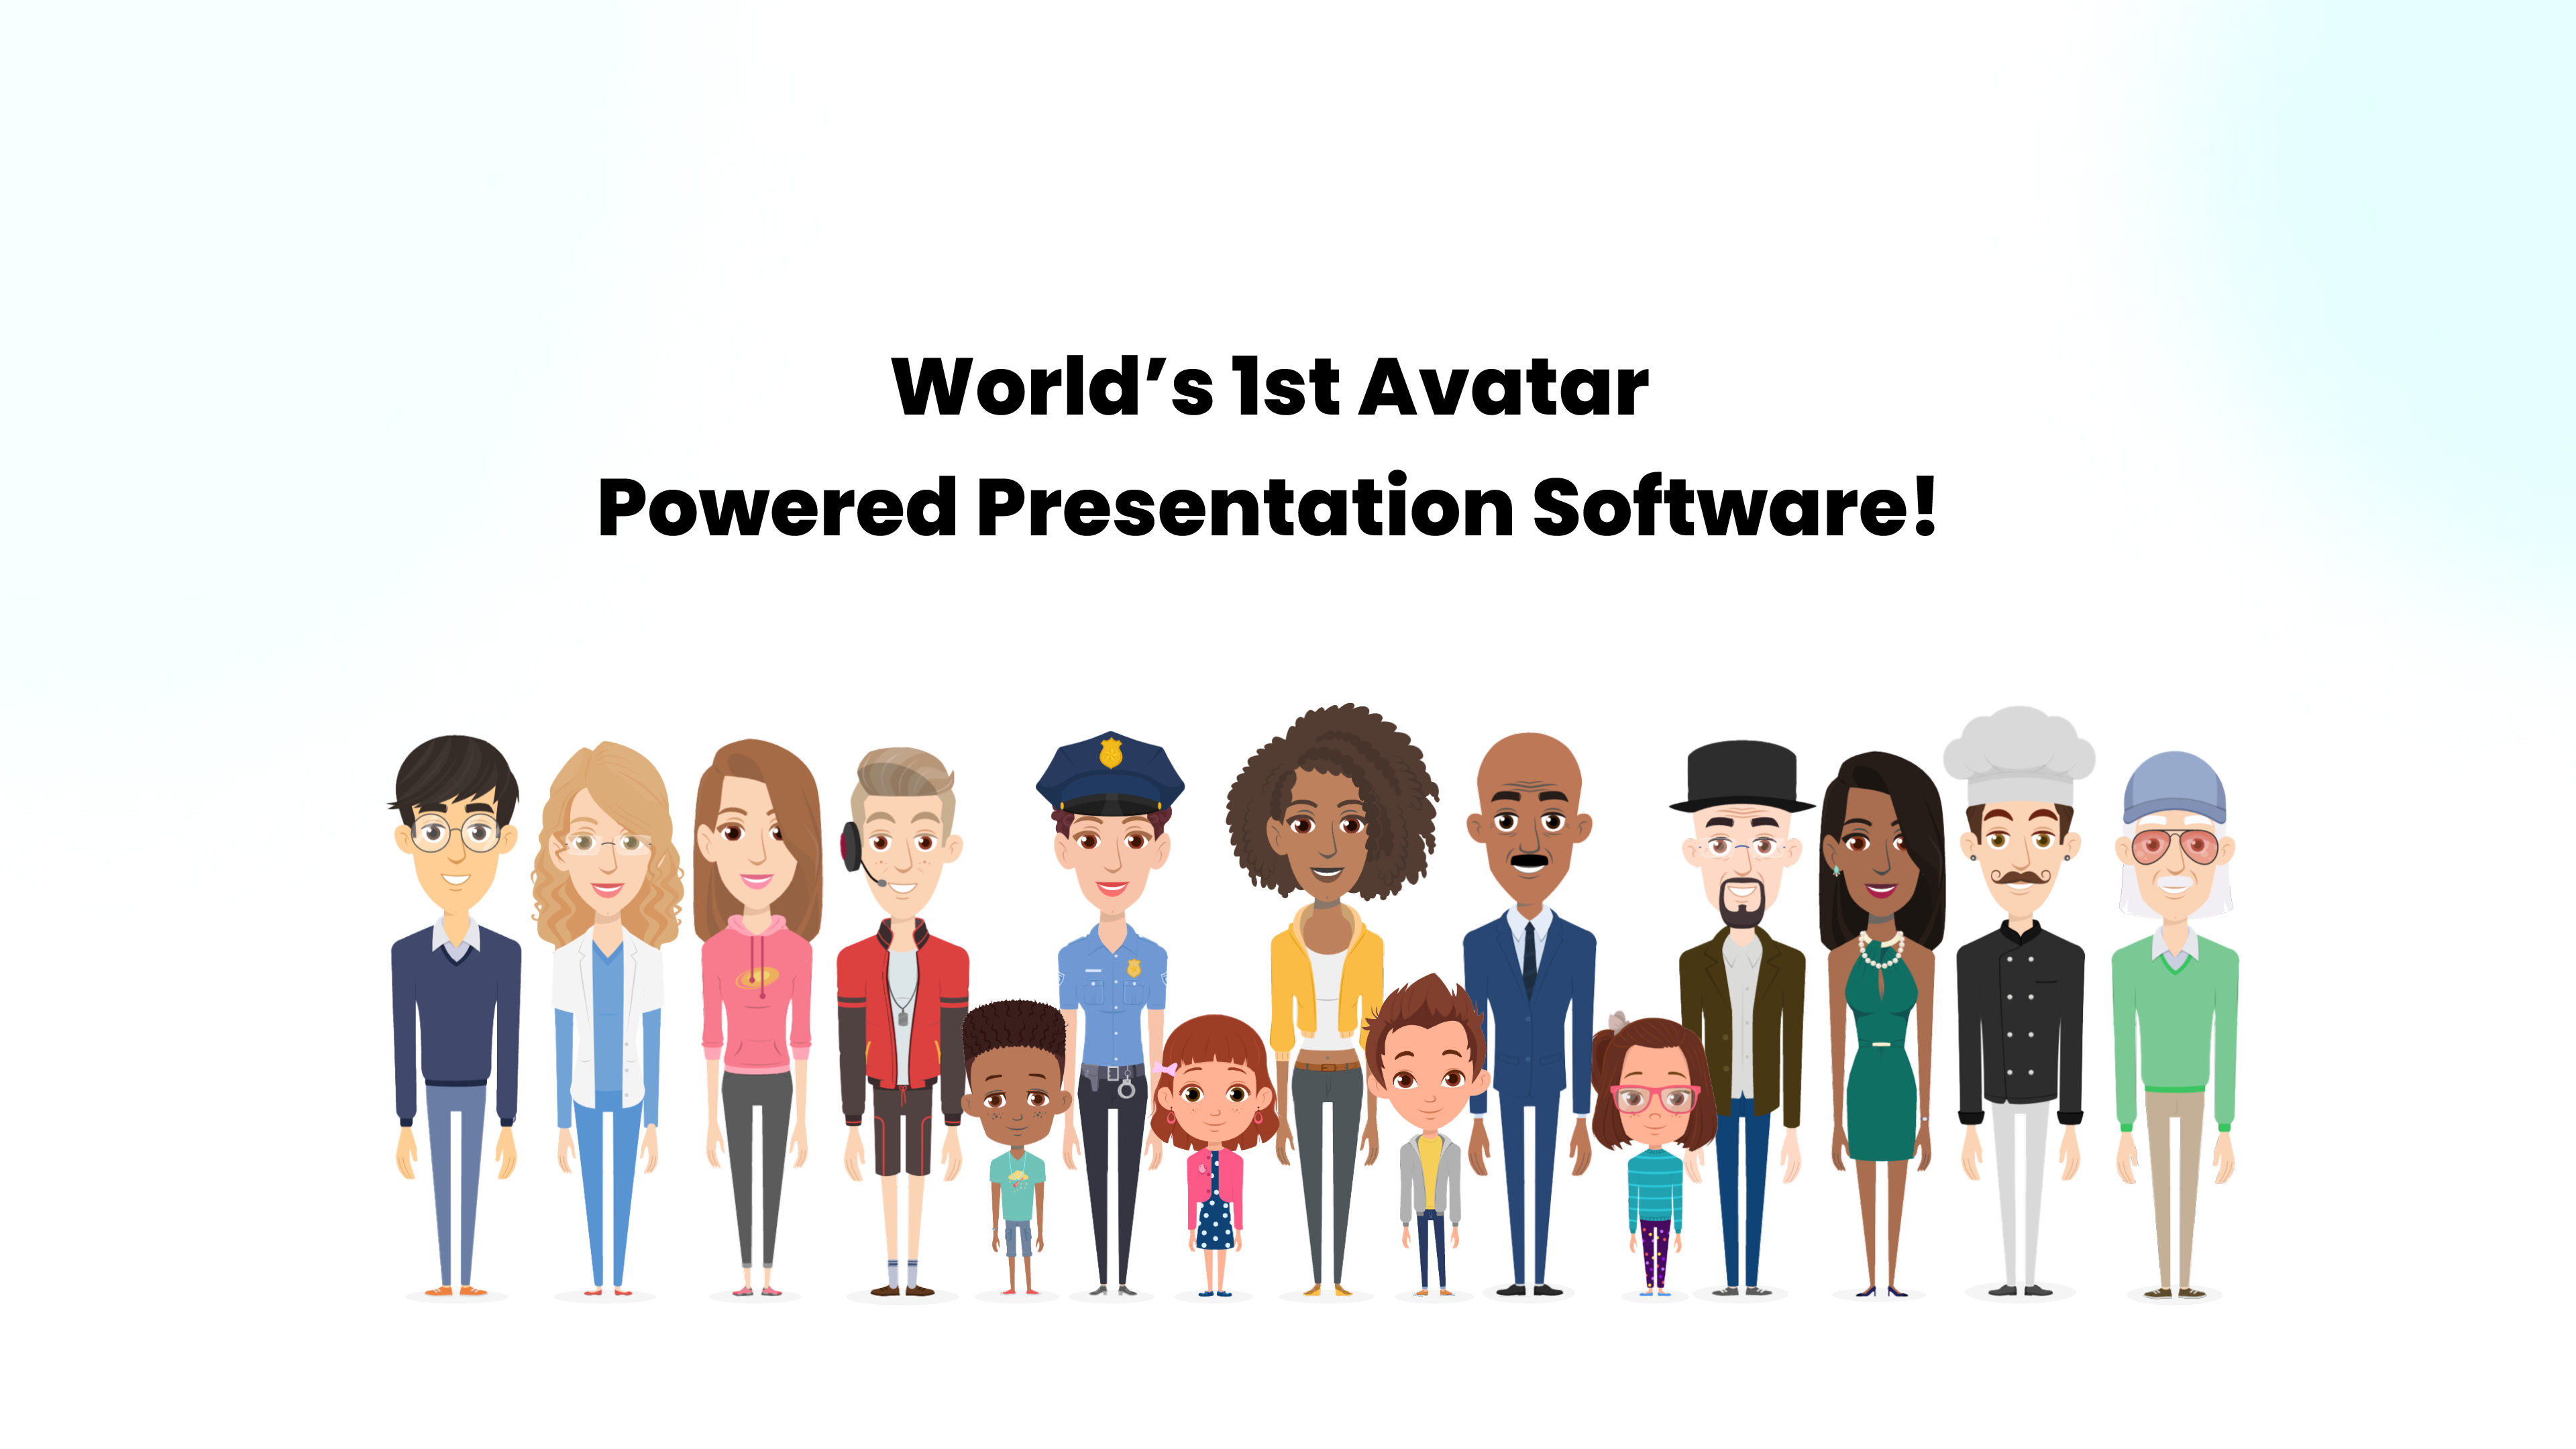 Try Animaker Deck  [FREE] Avatar-powered Presentation Maker